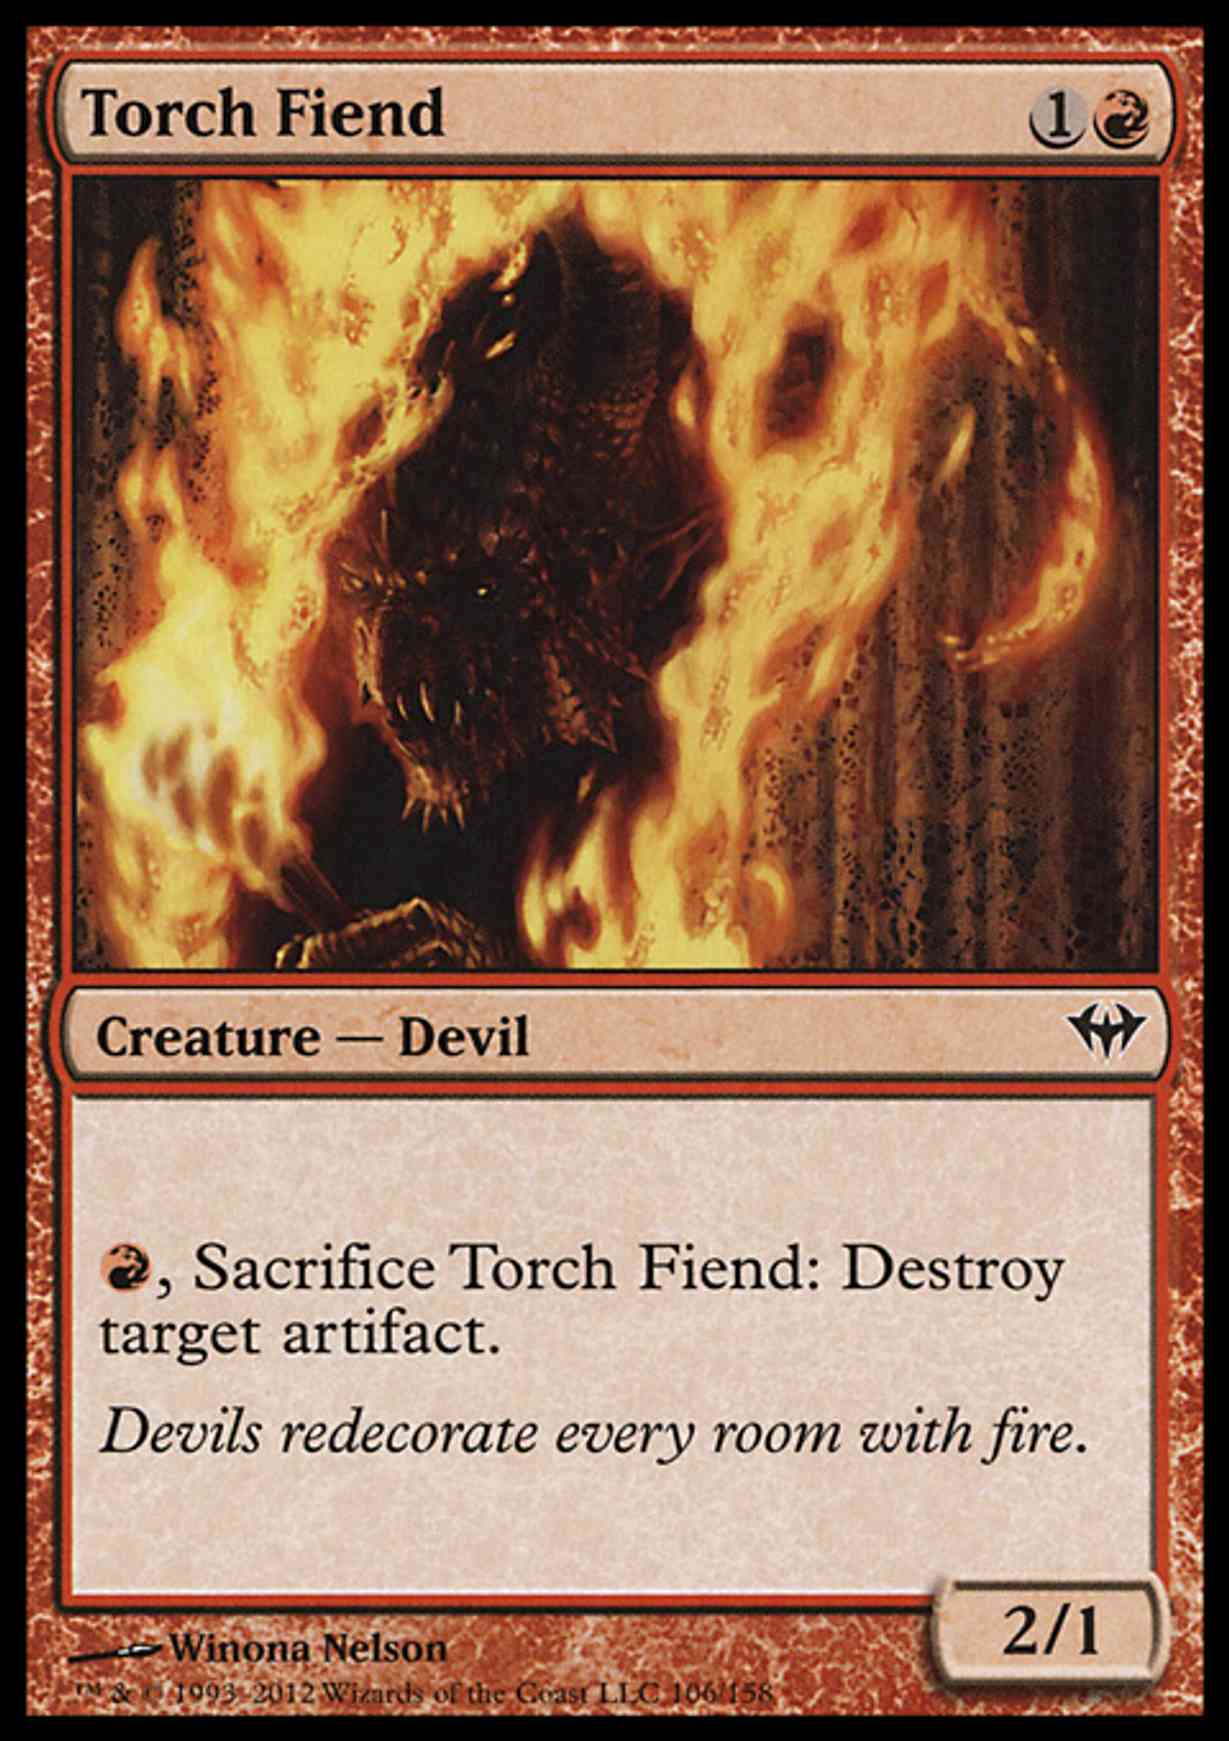 Torch Fiend magic card front